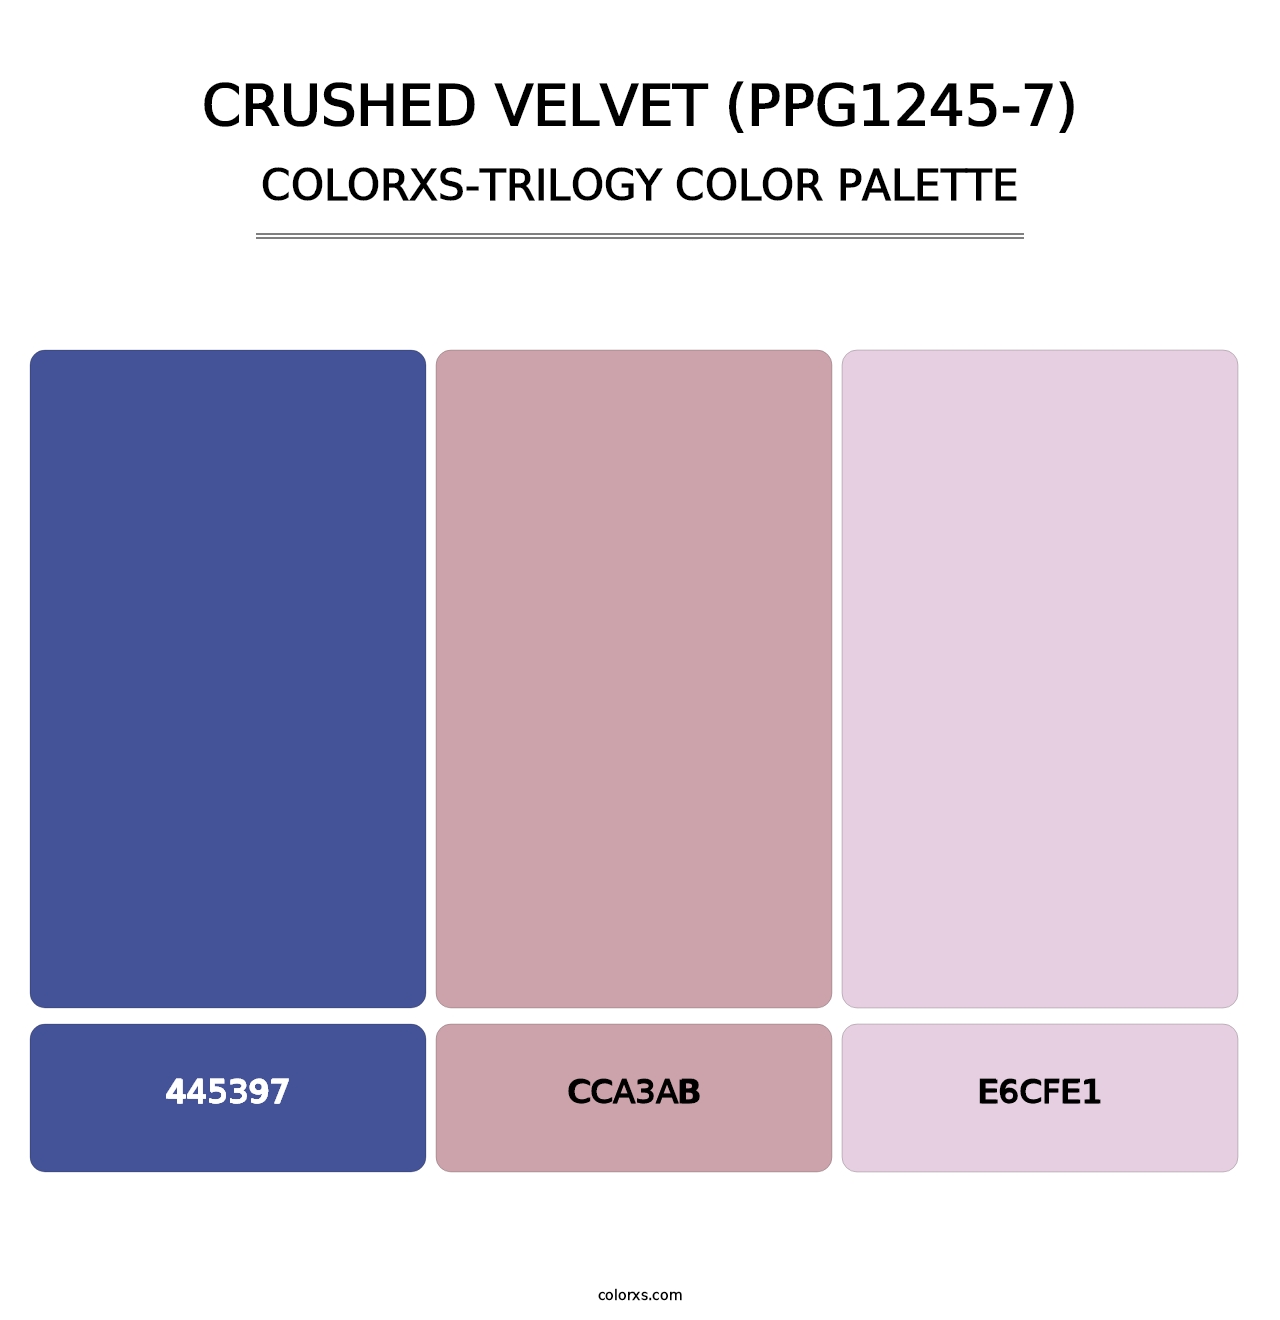 Crushed Velvet (PPG1245-7) - Colorxs Trilogy Palette